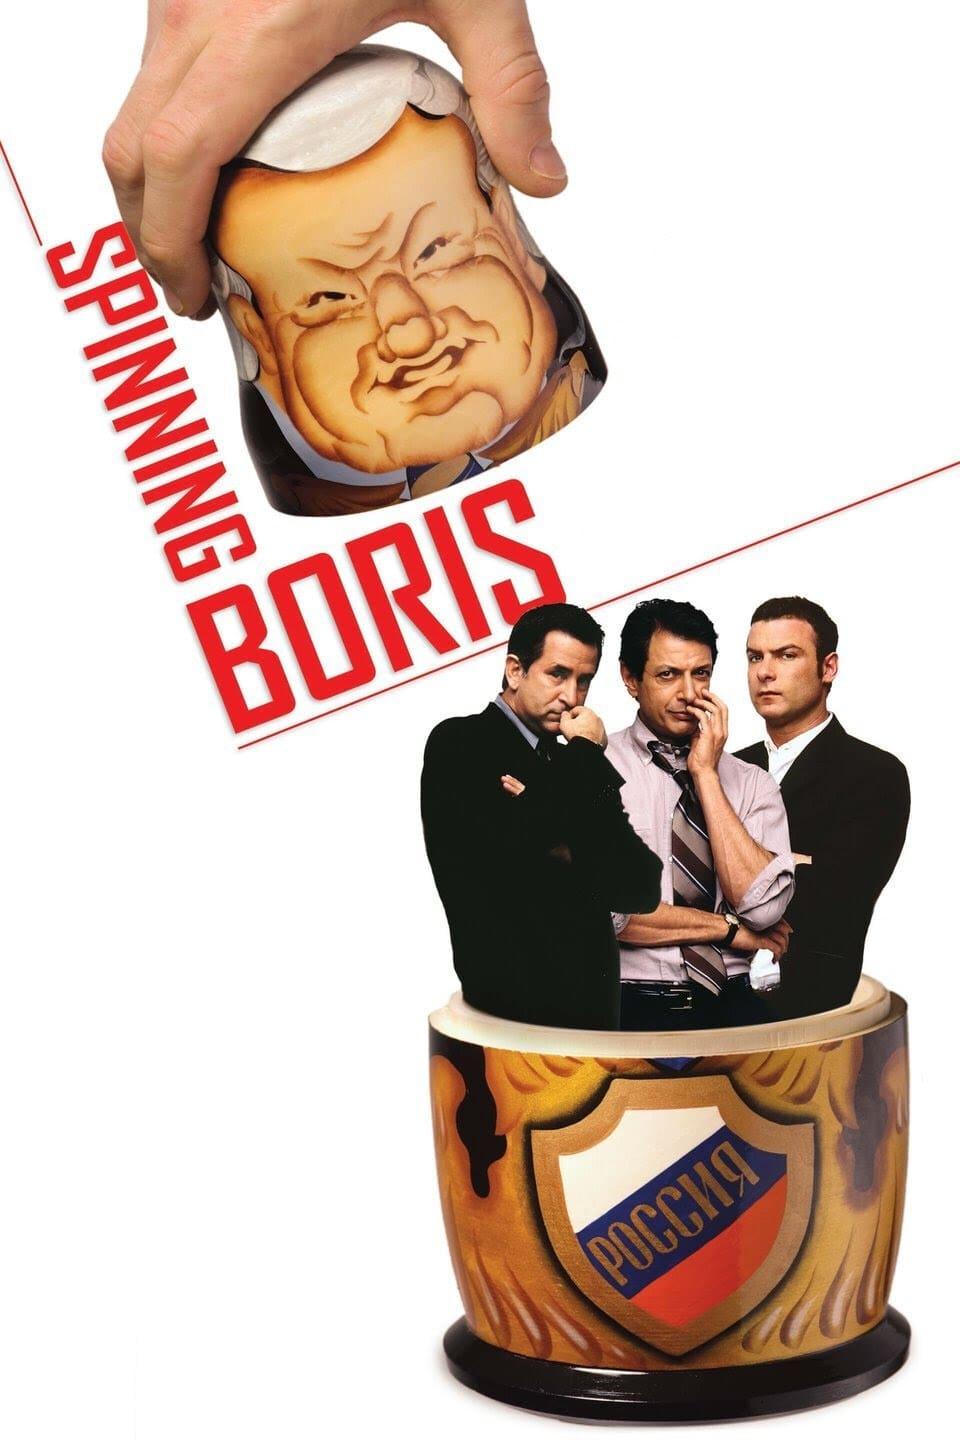 Spinning Boris poster